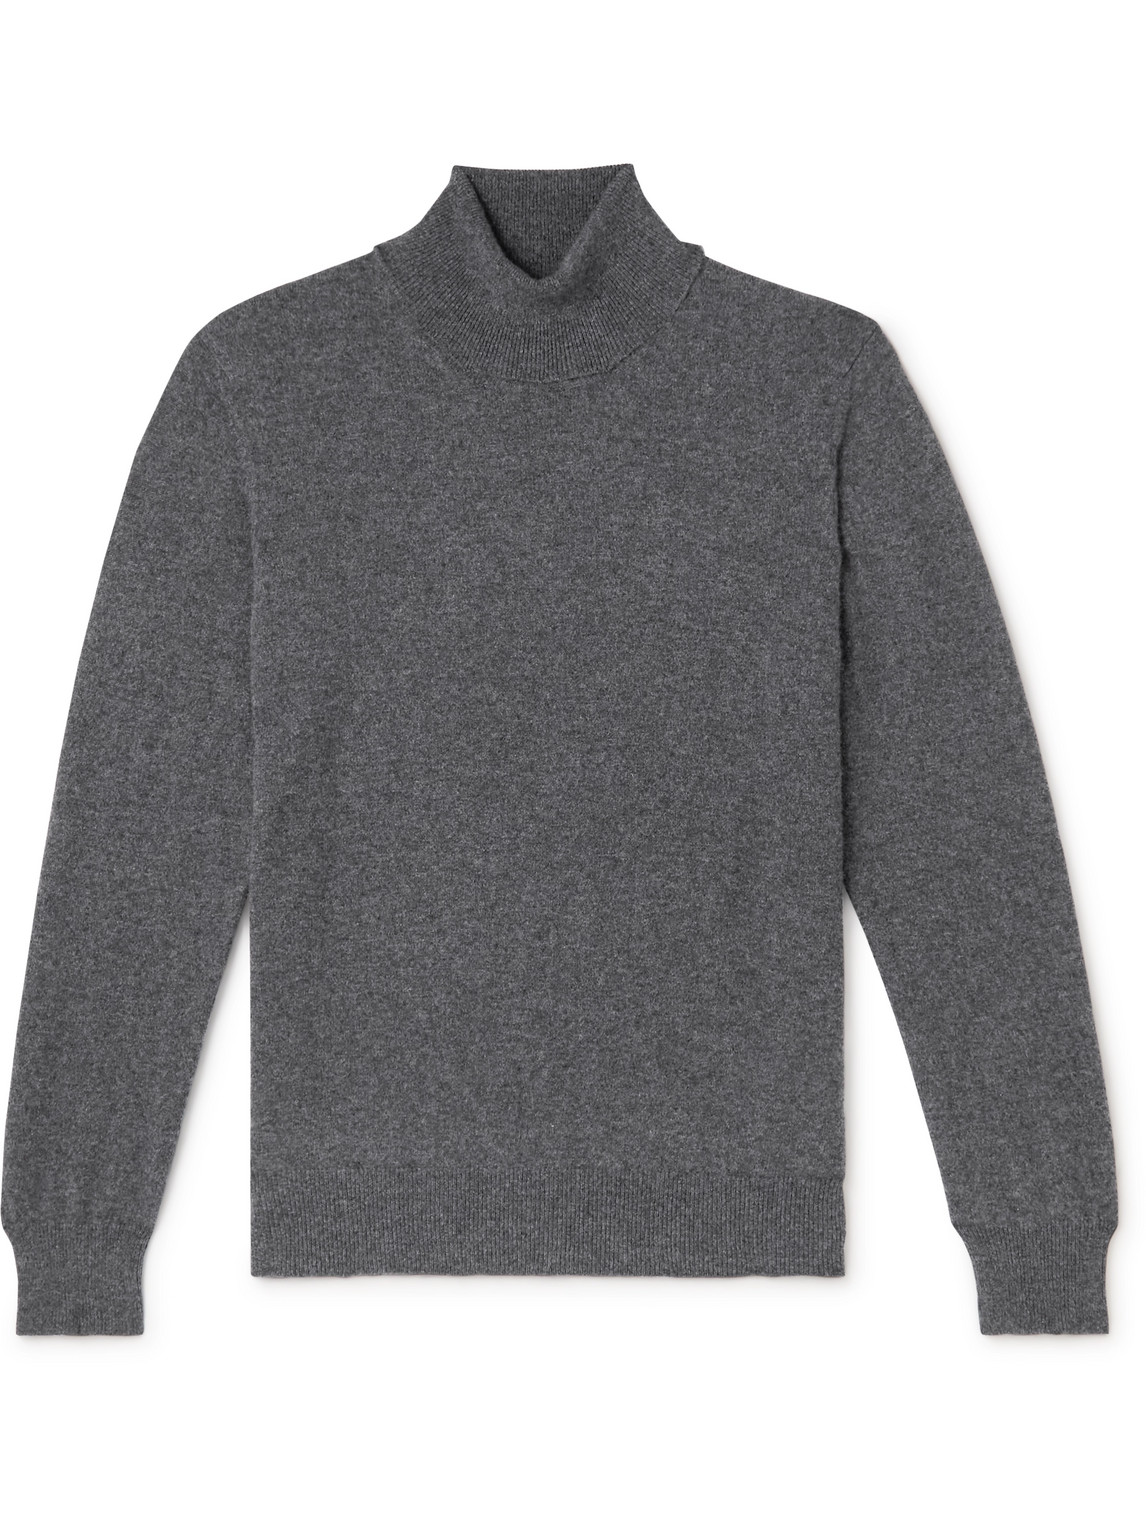 Altea Cashmere Rollneck Sweater In Gray